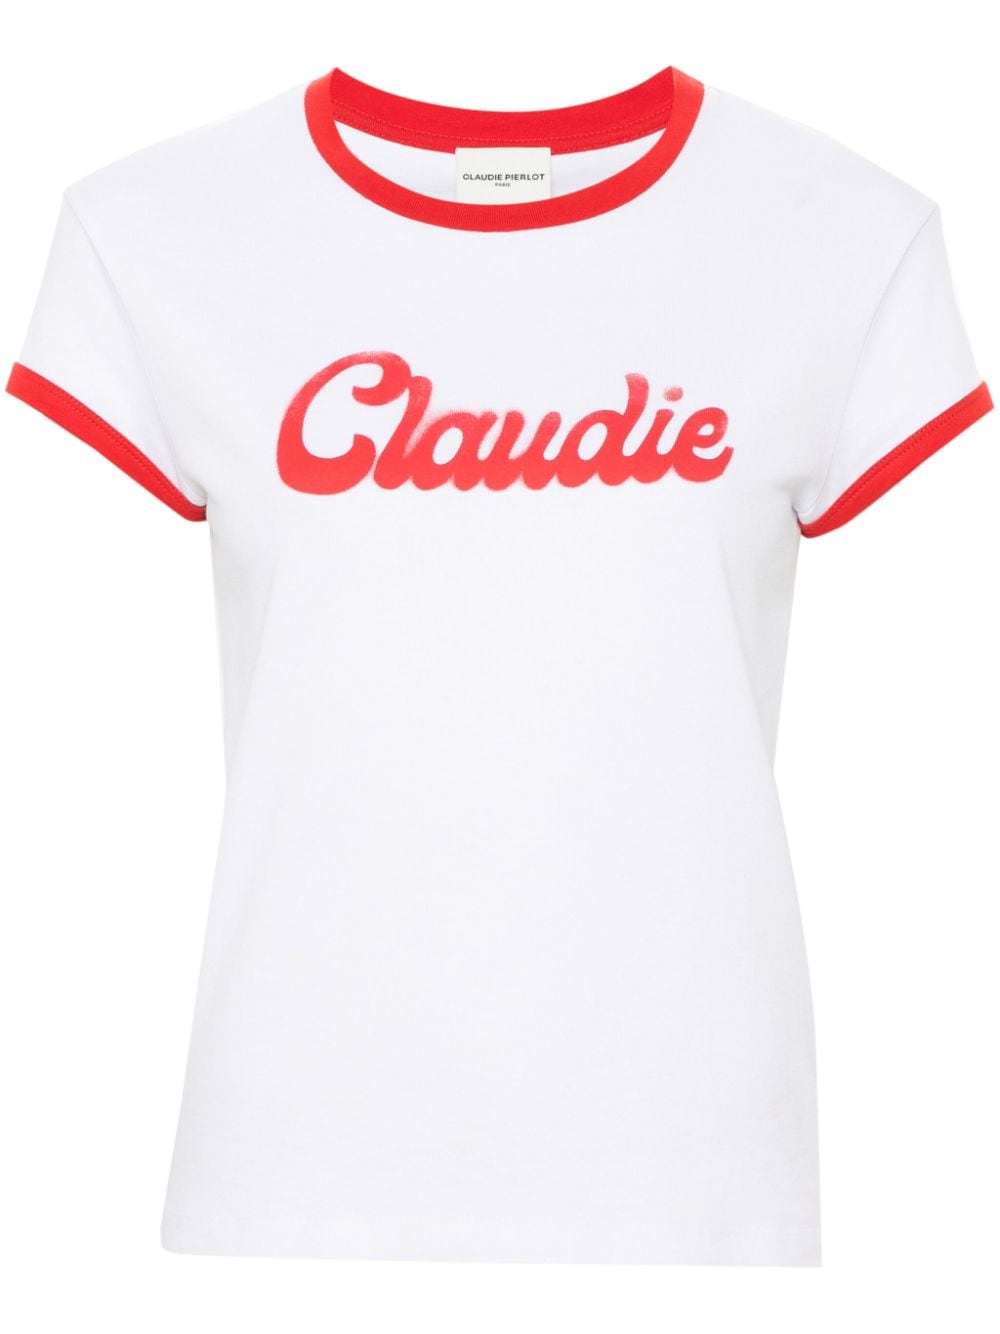 Claudie Pierlot Claudie Cotton T-shirt In White